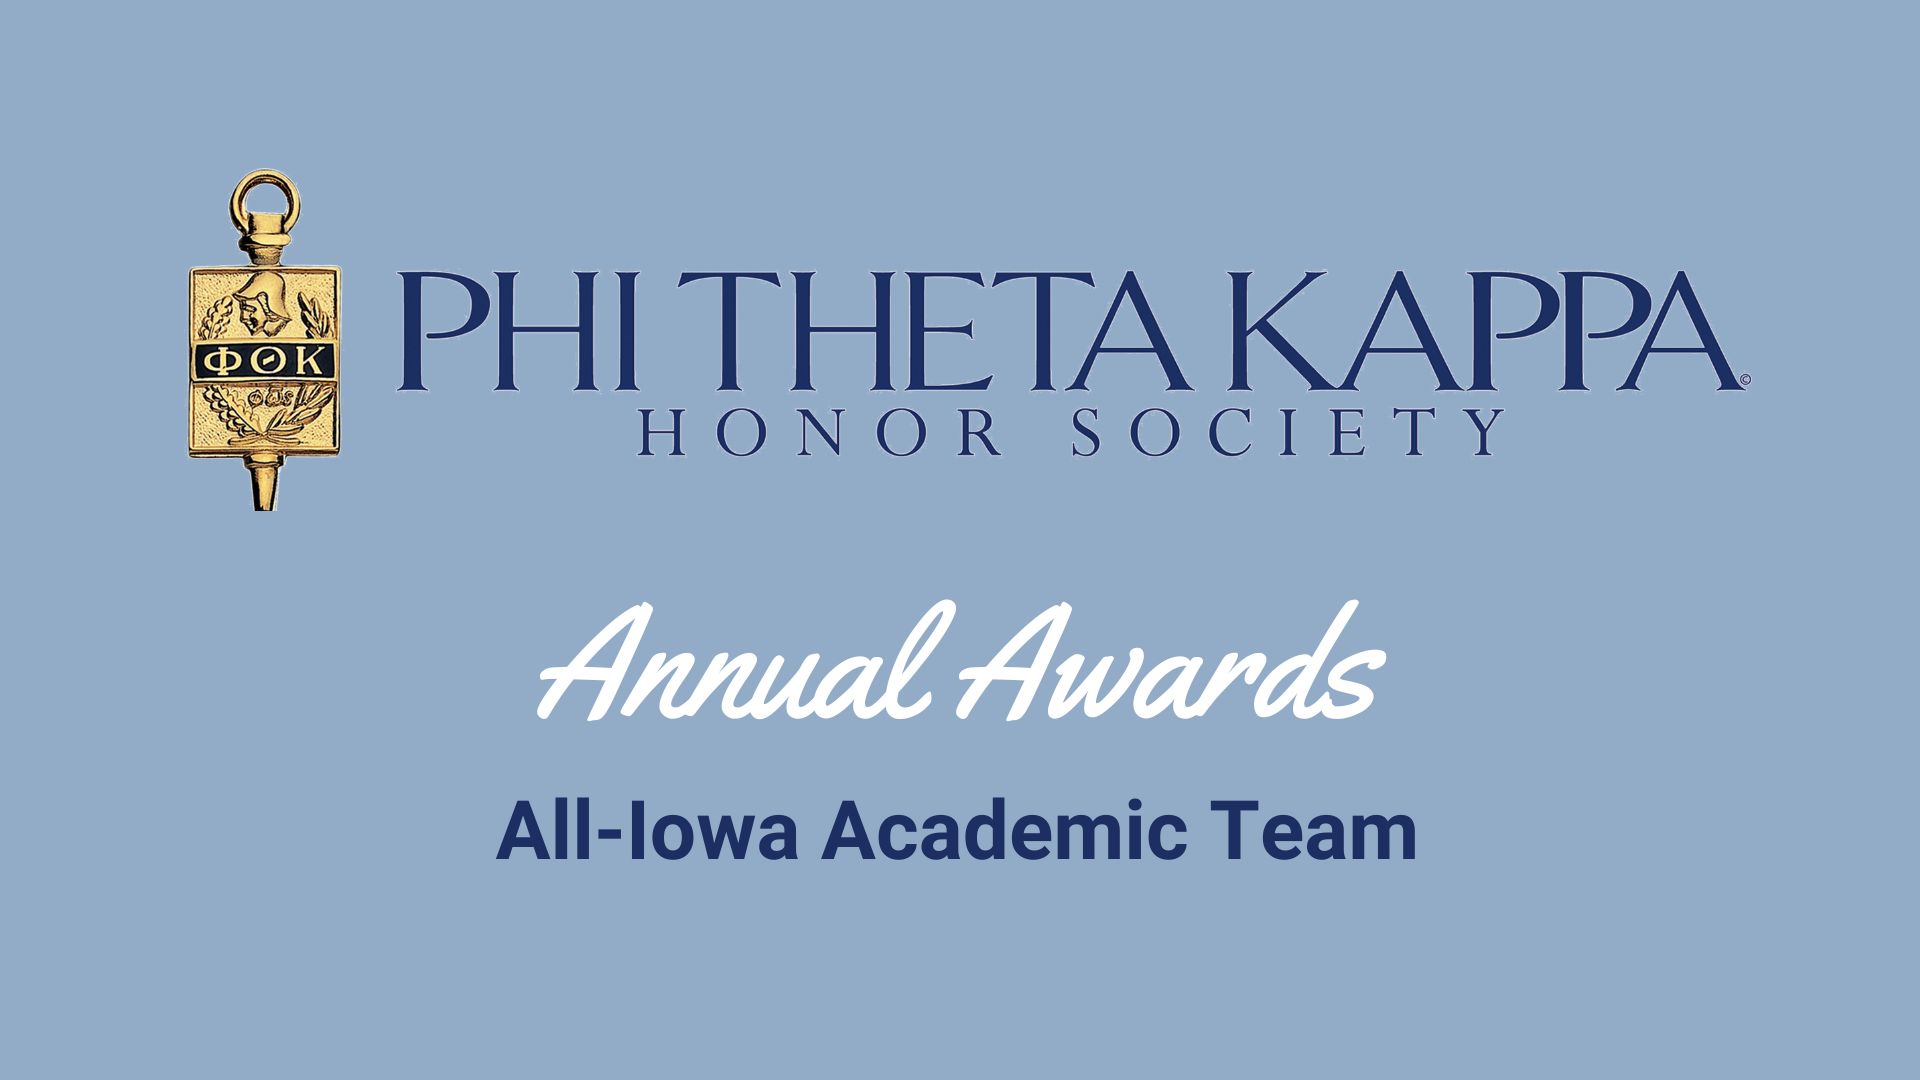 Phi Theta Kappa logo with text "Annual Awards, All-Iowa Academic Team."